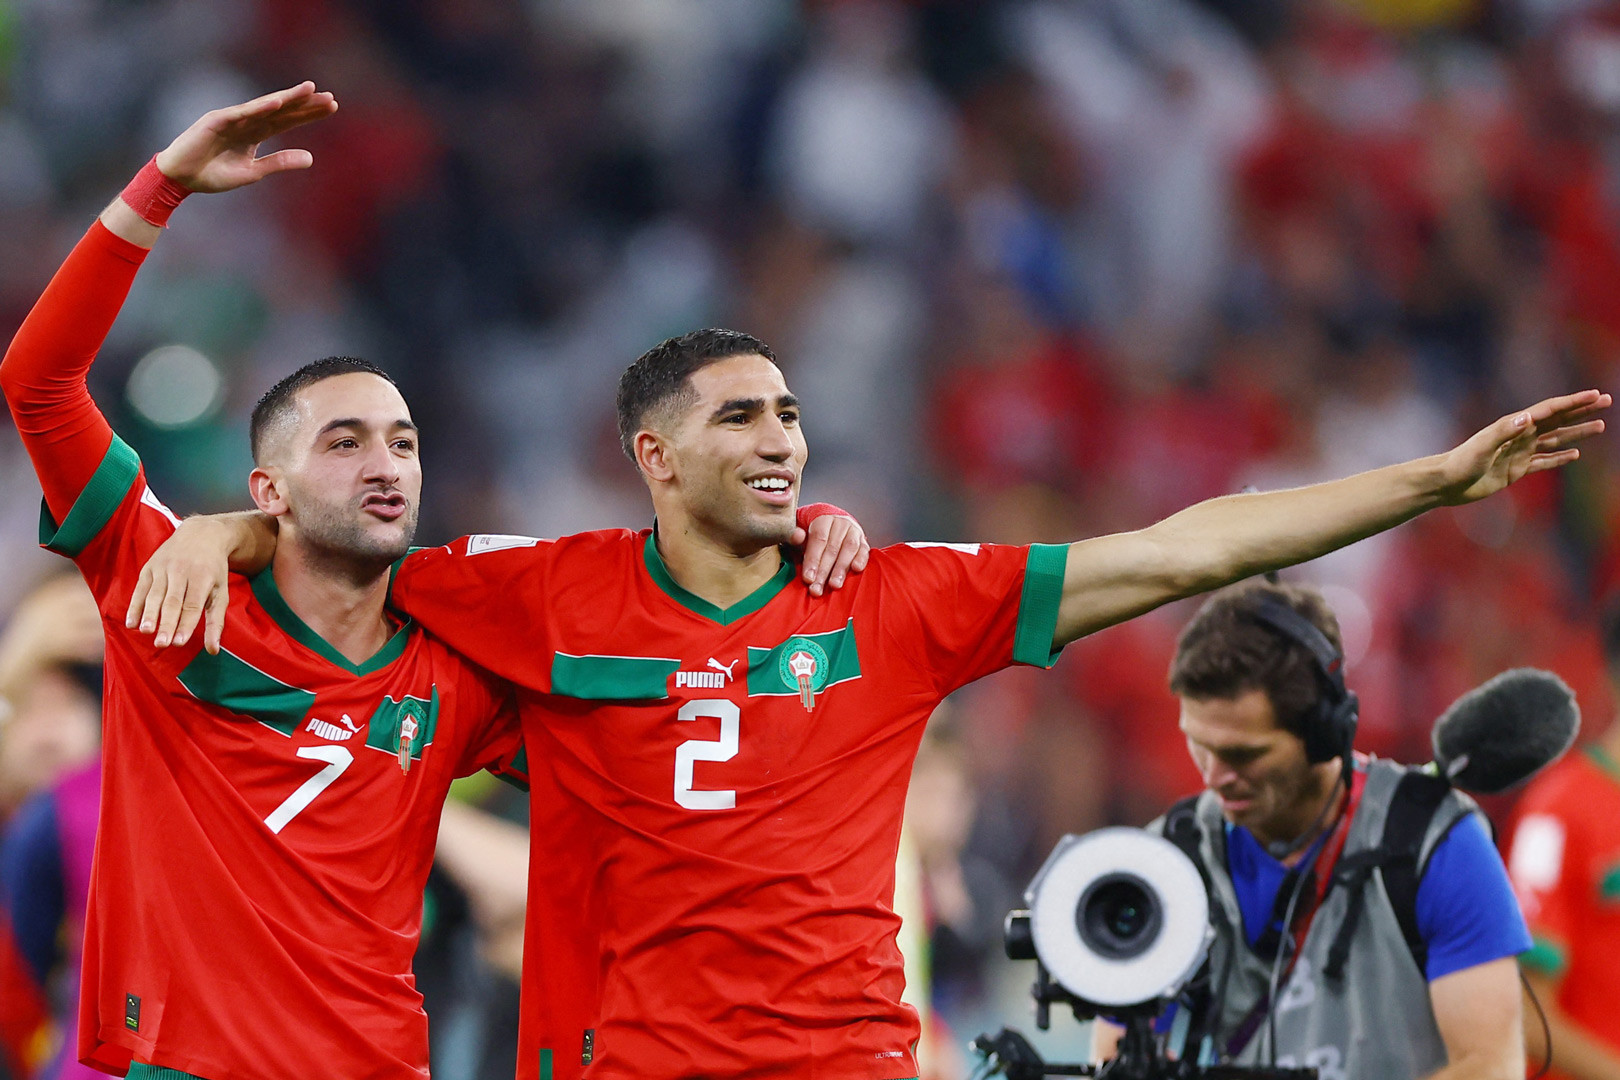 Maroc lập kỳ tích World Cup 2022: Sư tử Hakimi